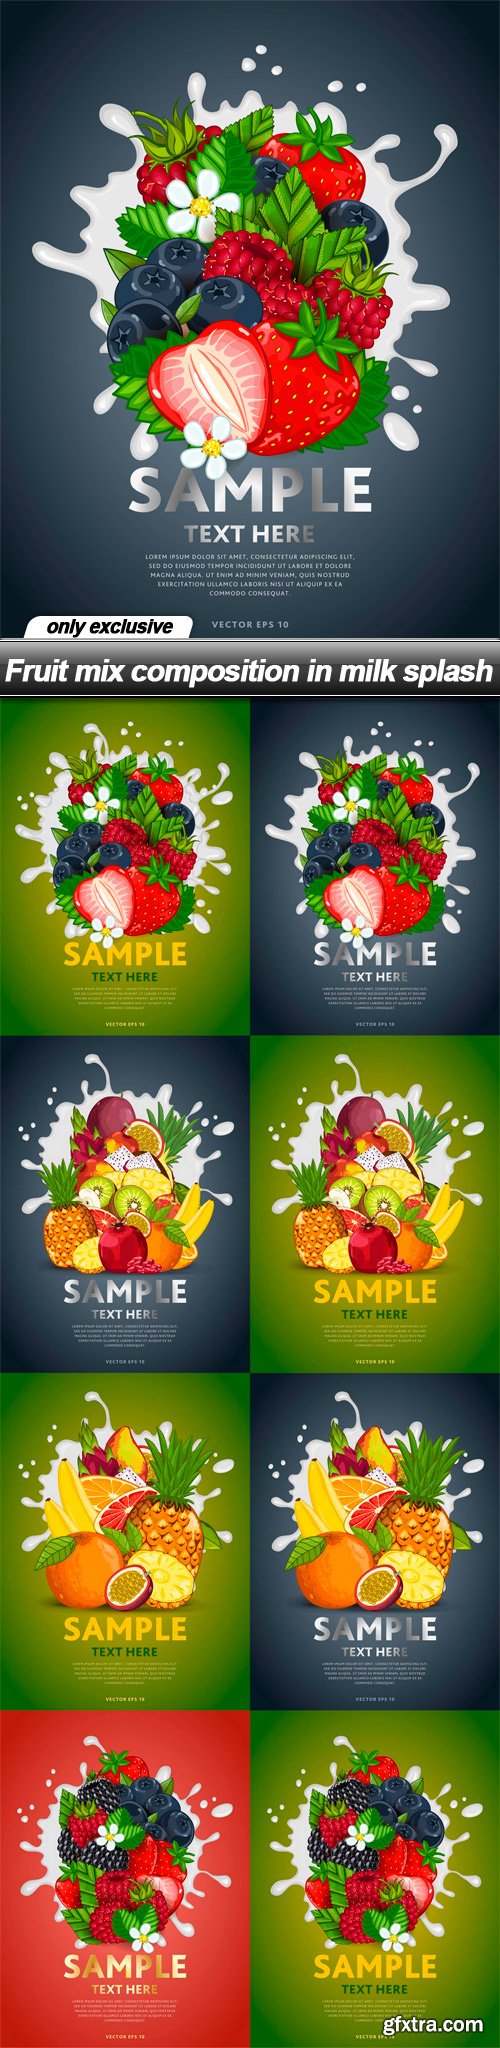 Fruit mix composition in milk splash - 8 EPS